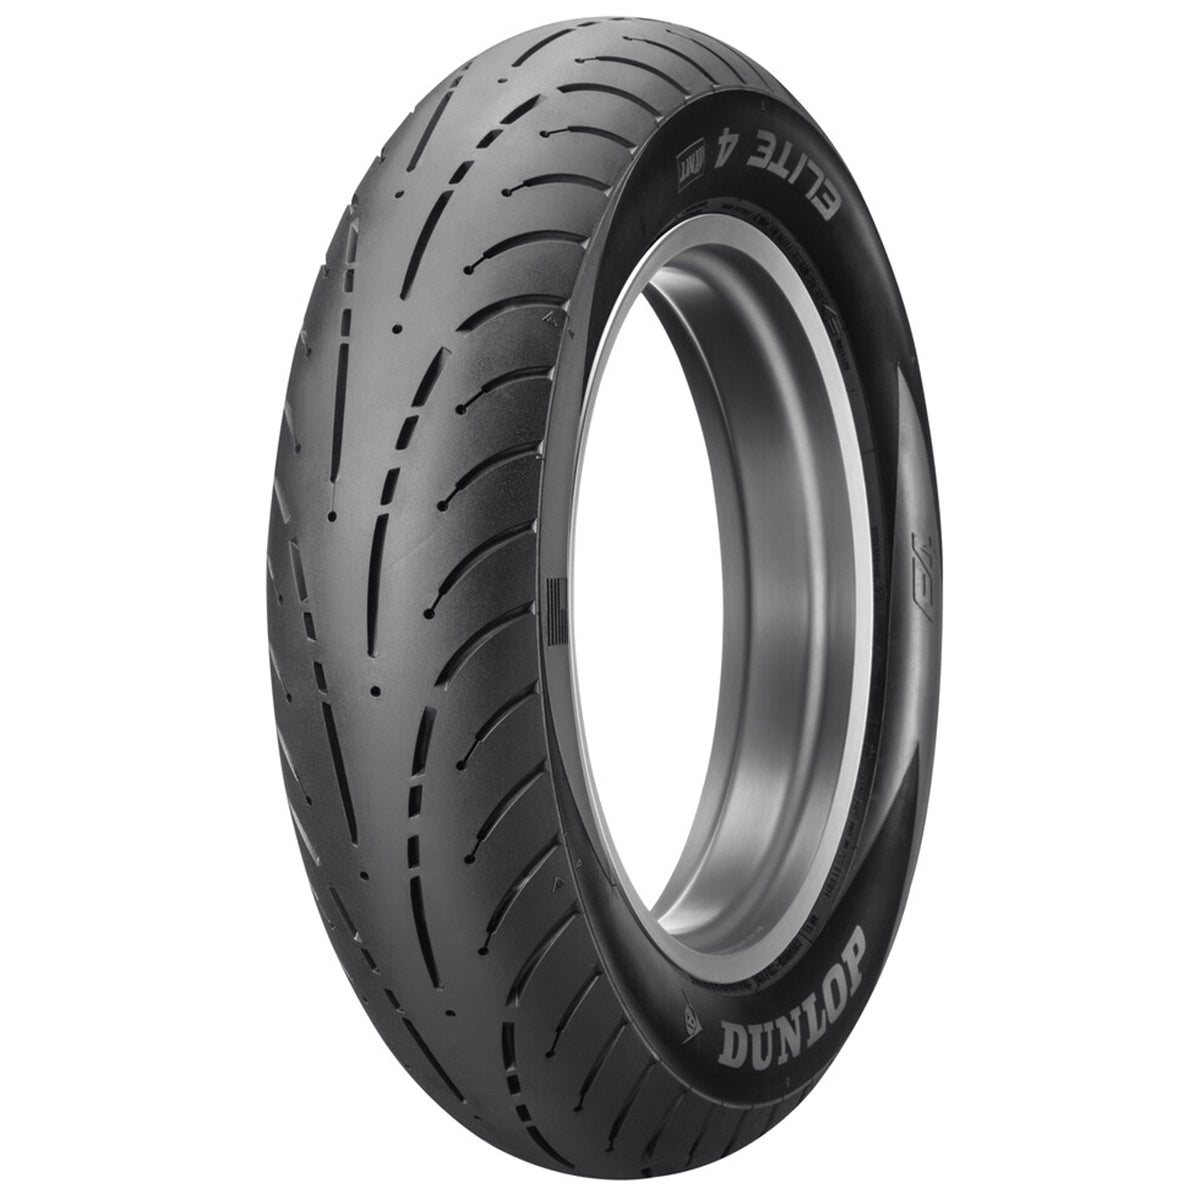 Dunlop Elite 4 16" Rear Cruiser Tires-0306